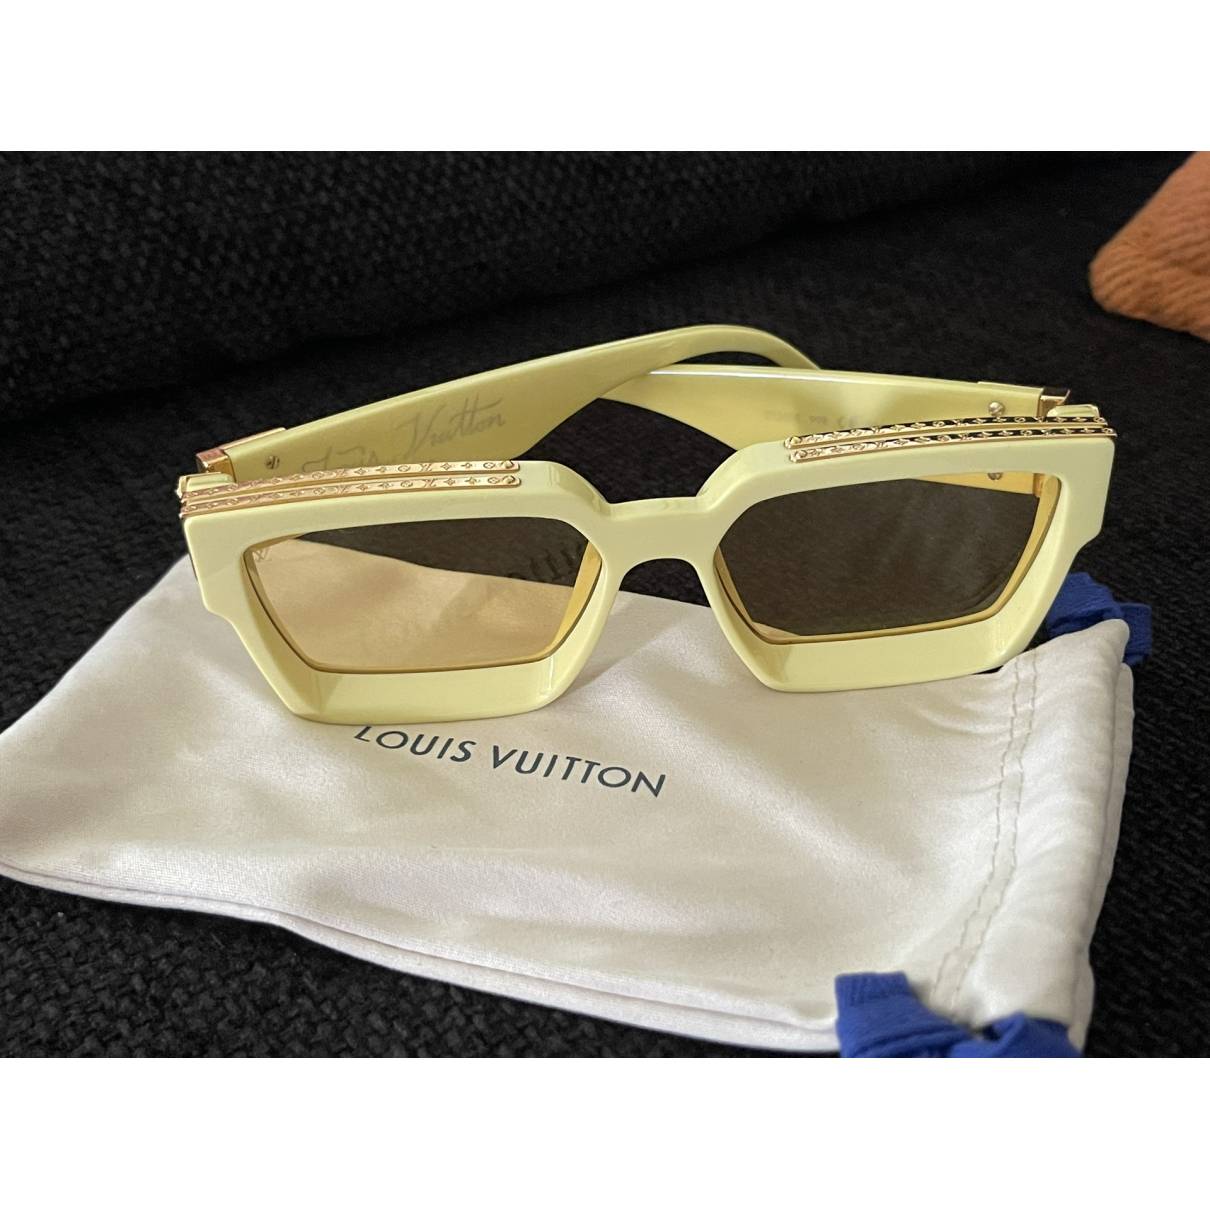 Sunglasses Louis Vuitton Yellow in Plastic - 34321220